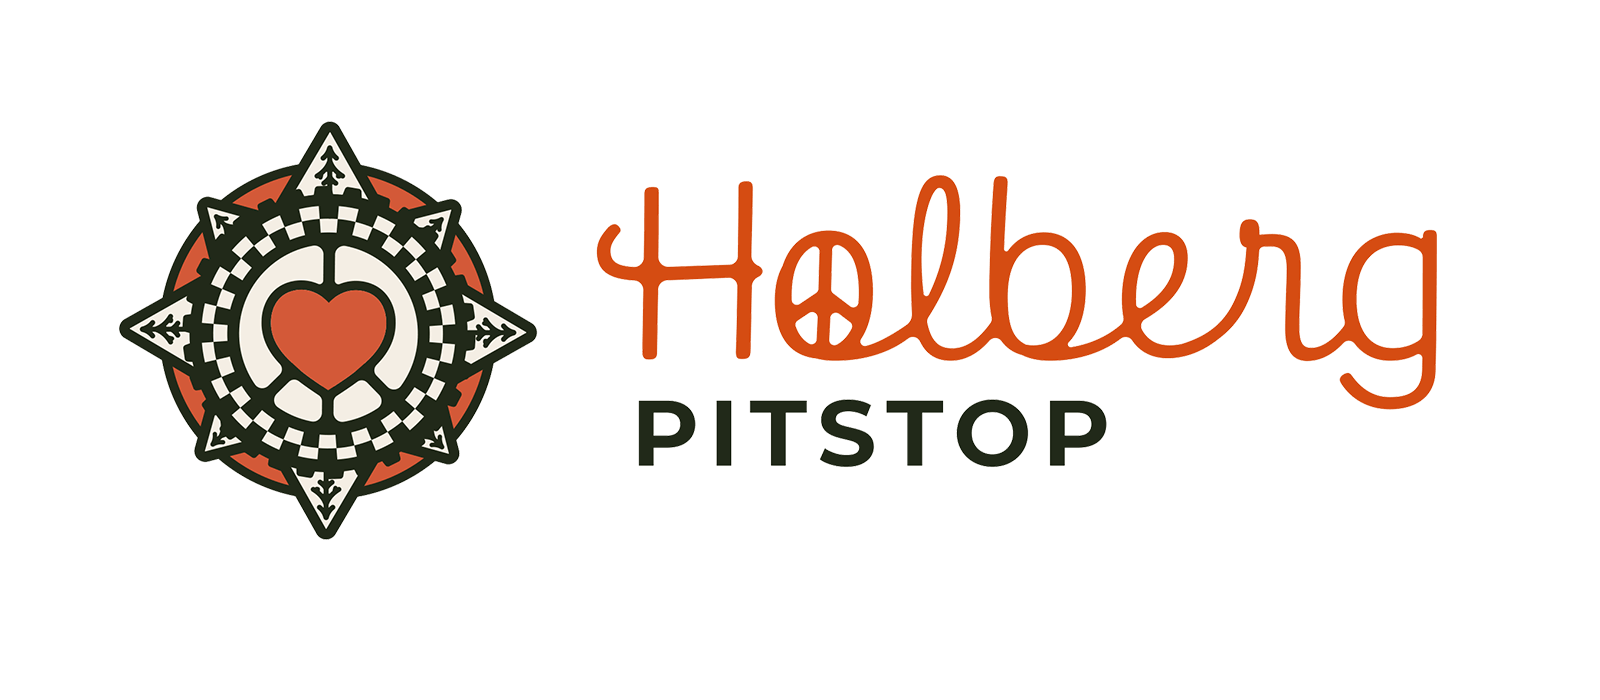 Holberg Pitstop logo 